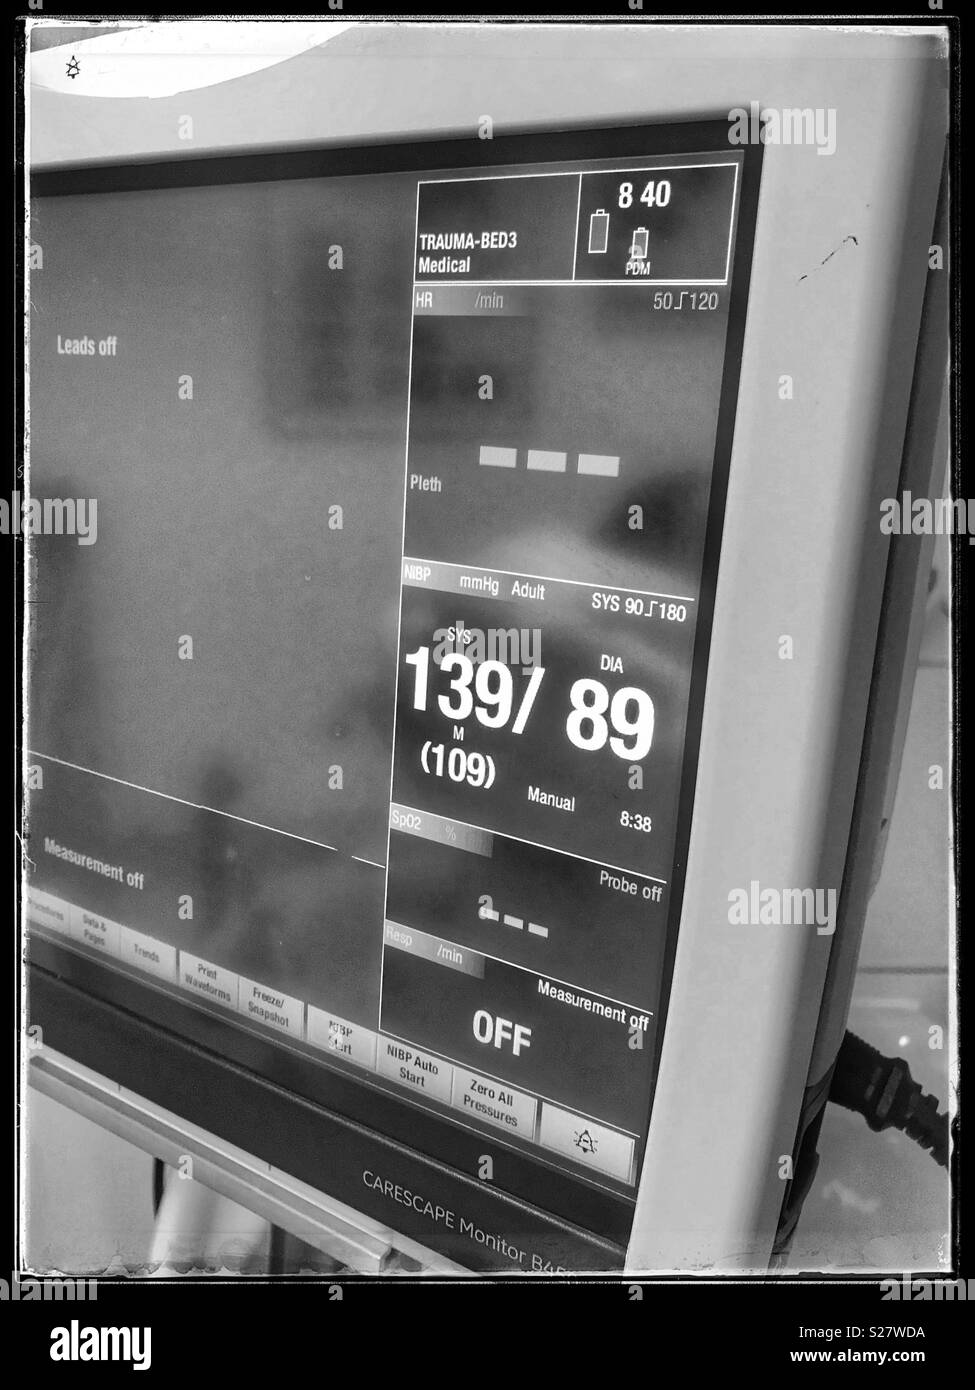 Blood pressure monitor in hospital A&E ward. Stock Photo